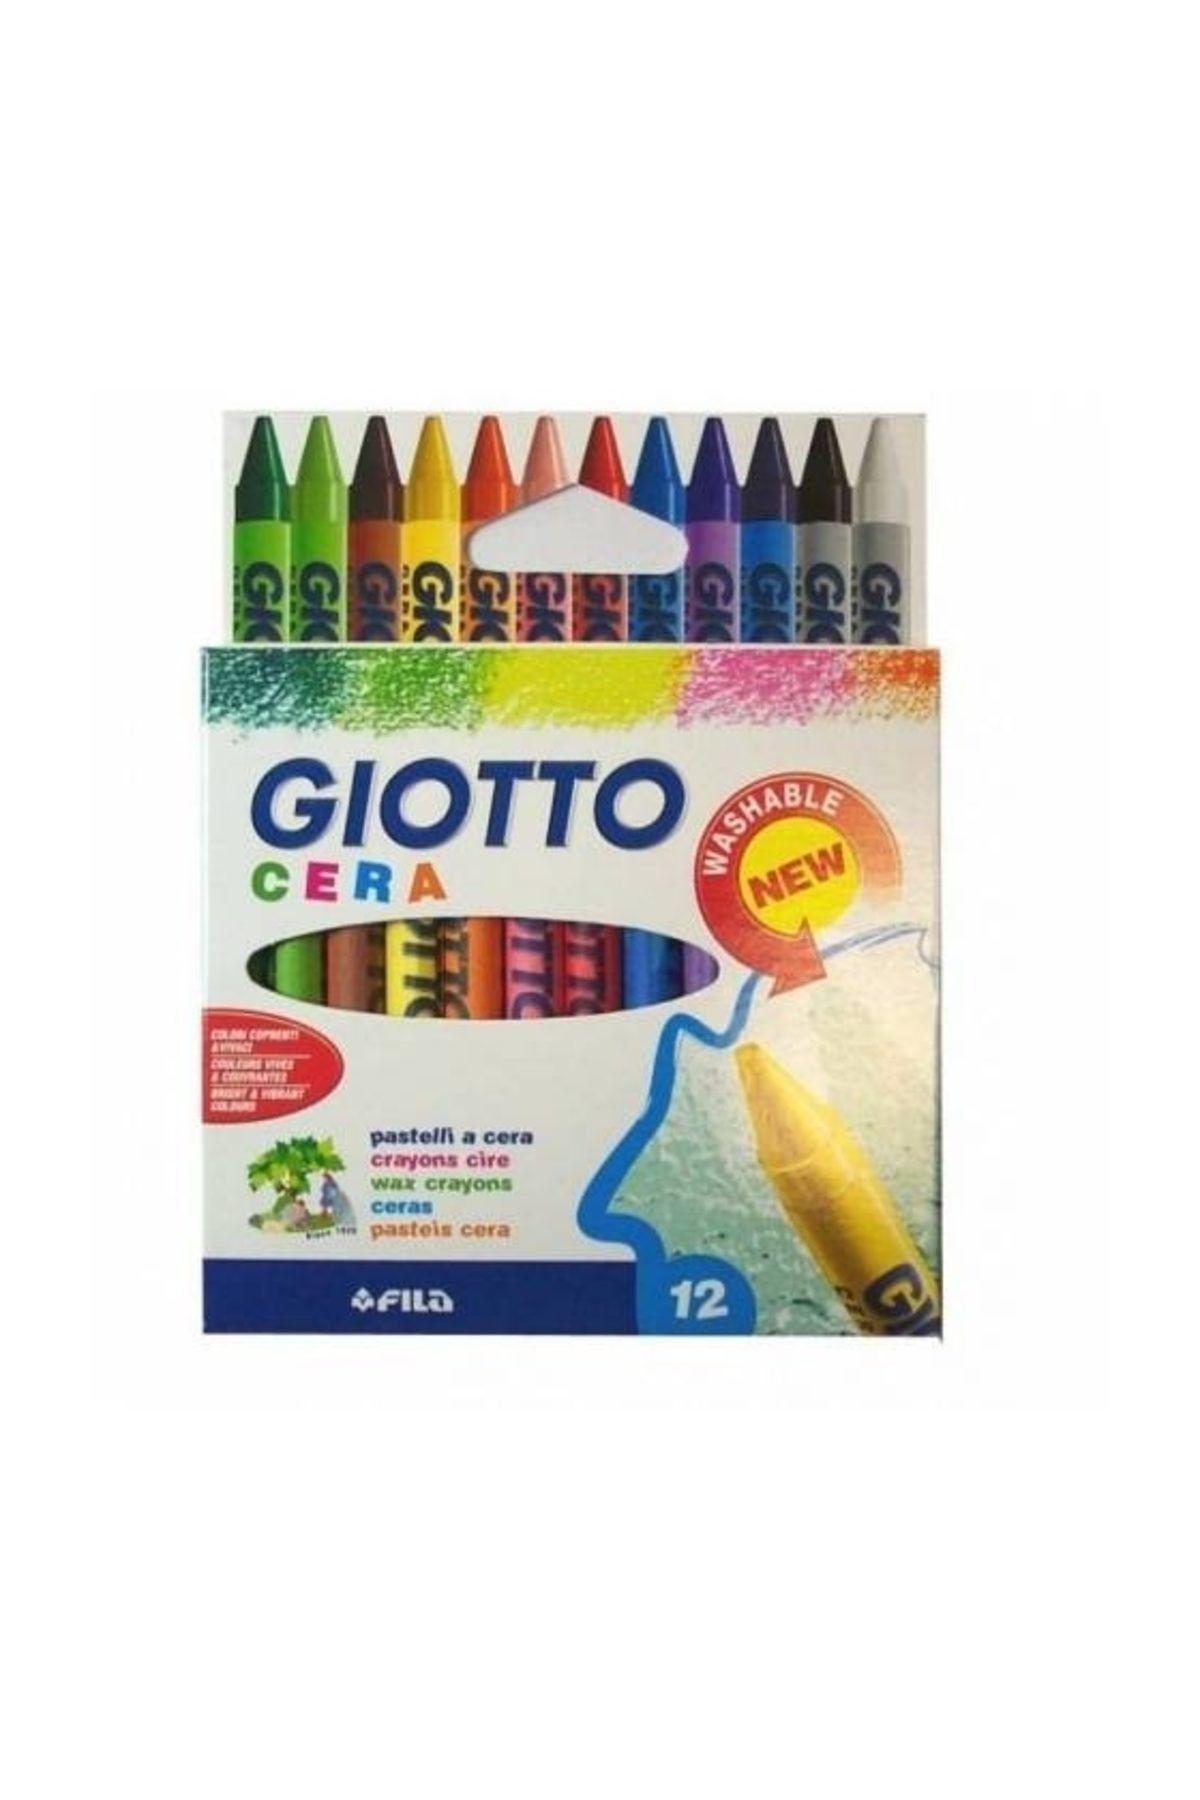 Giotto Marka: Gıotto Cera Mum Boya 12'li Paket Kategori: Pastel Boya